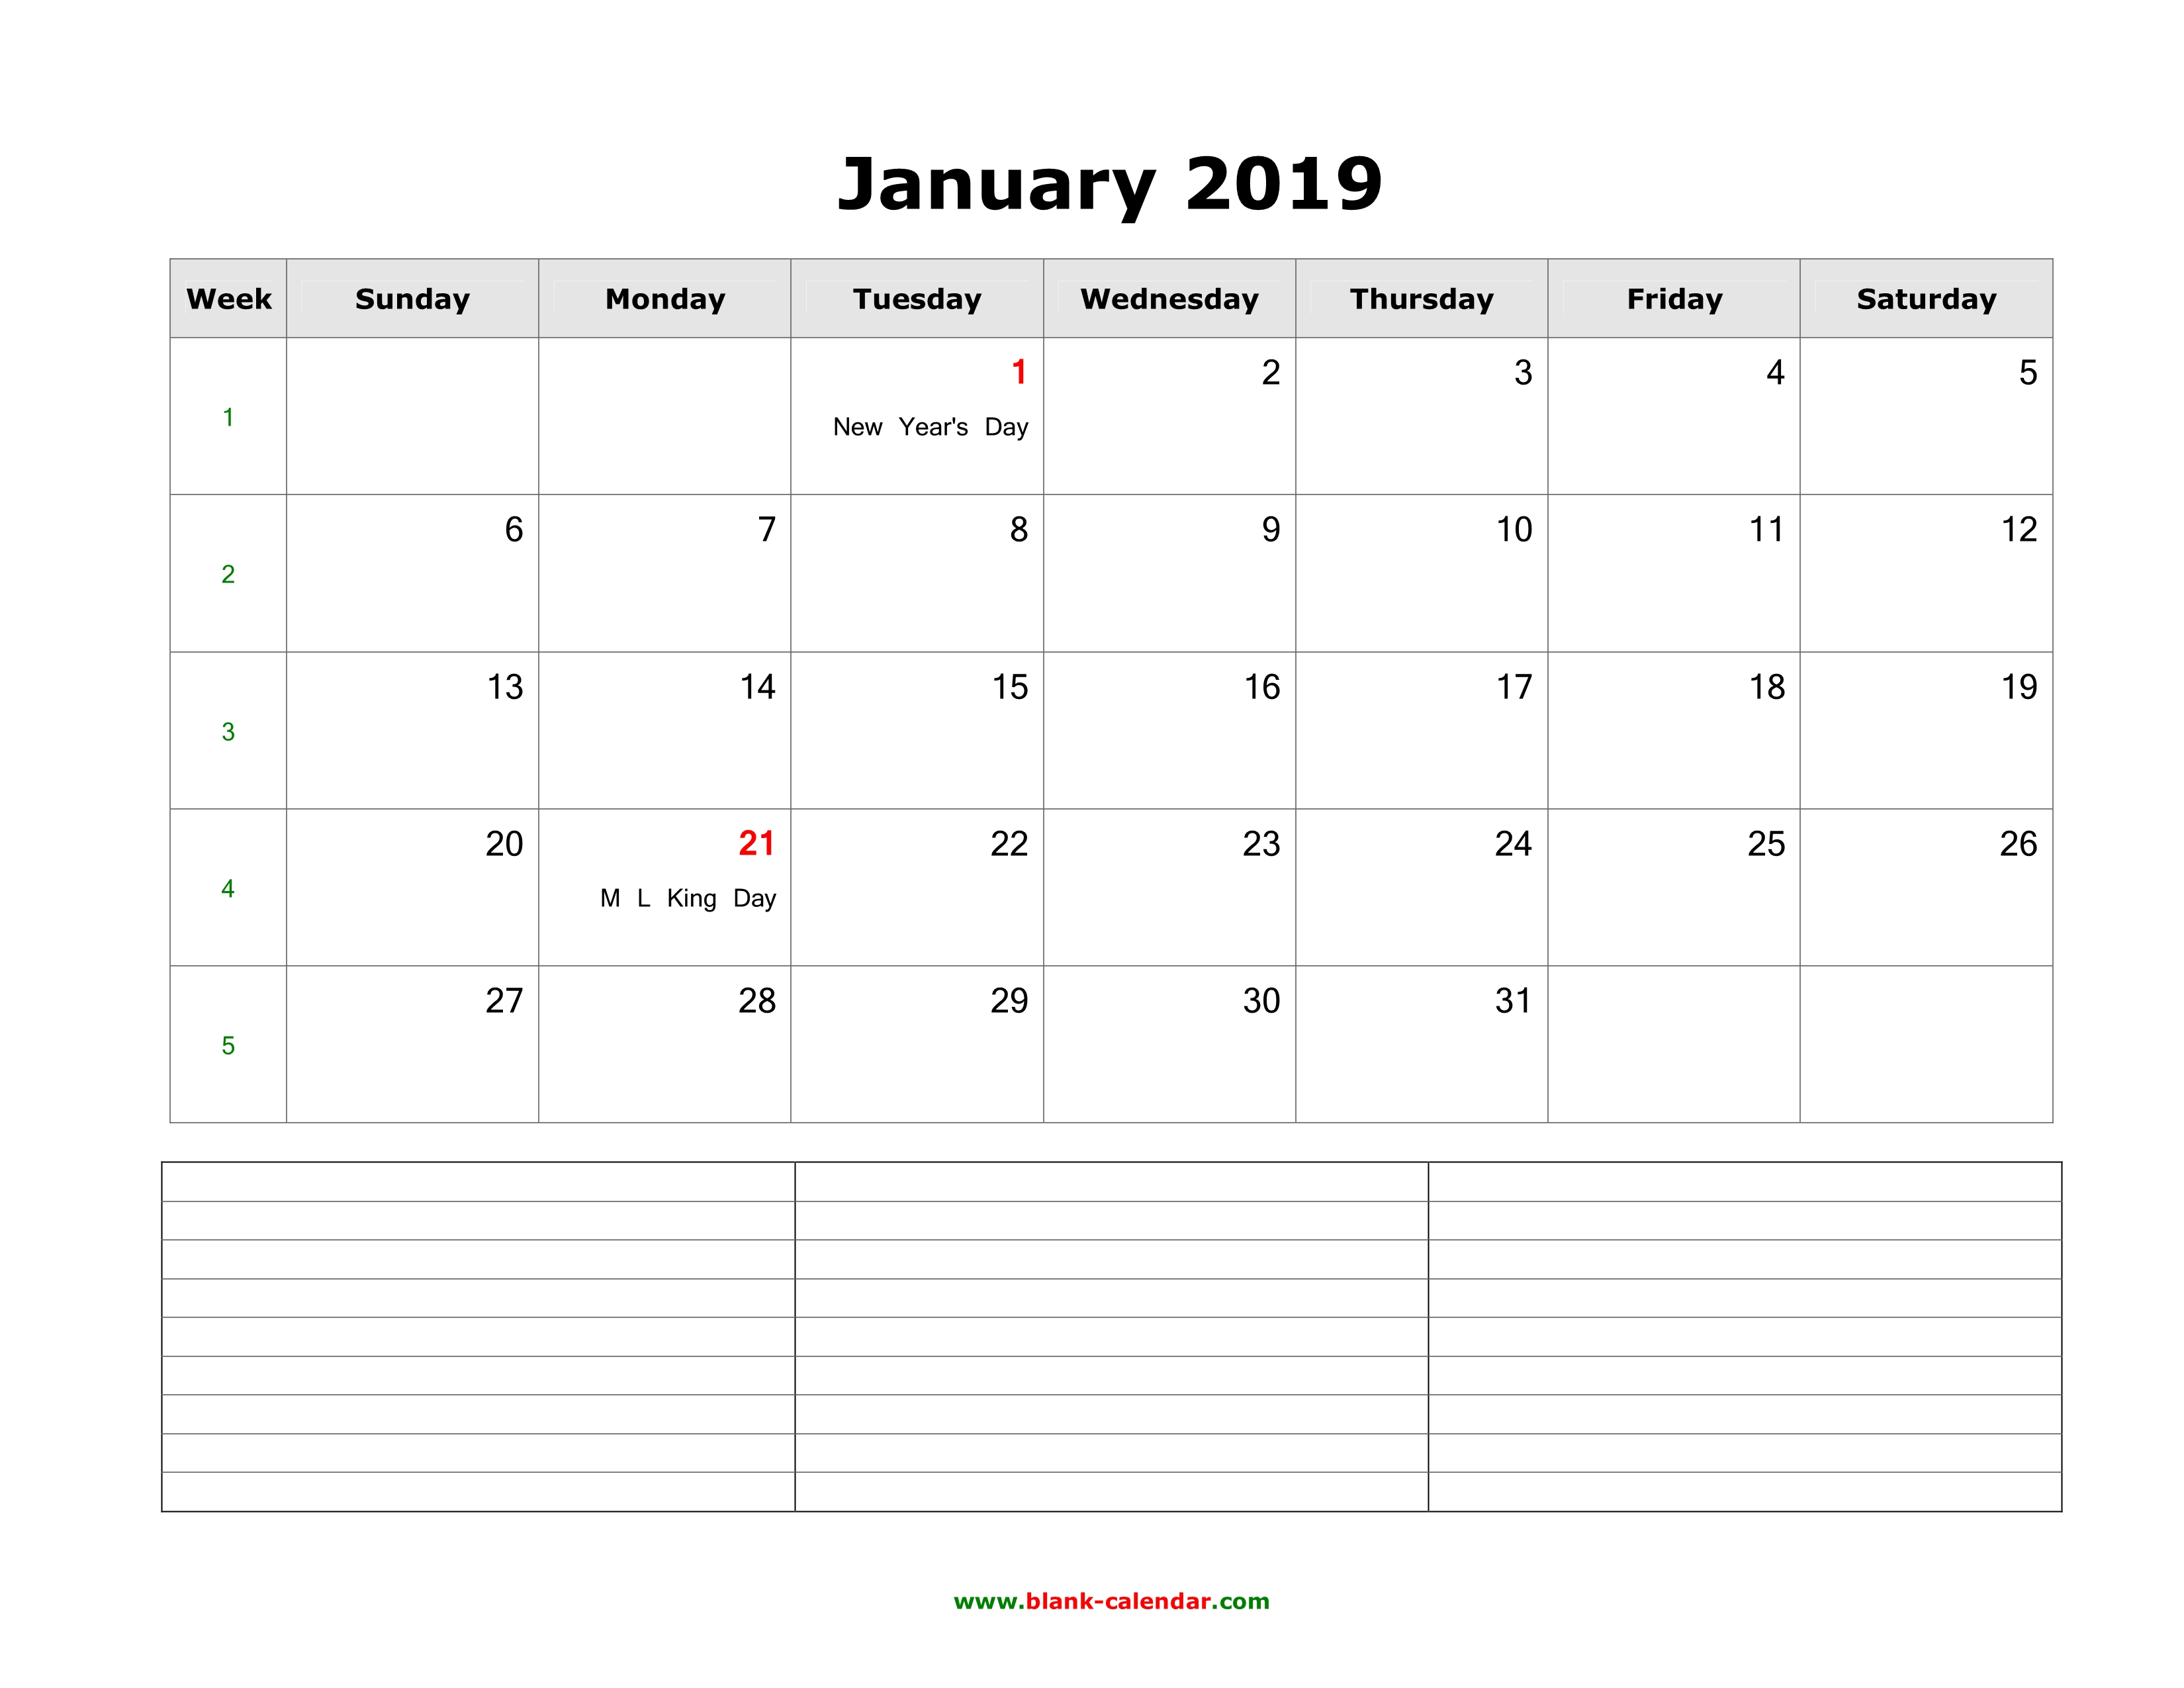 January 2019 Calendar Notes